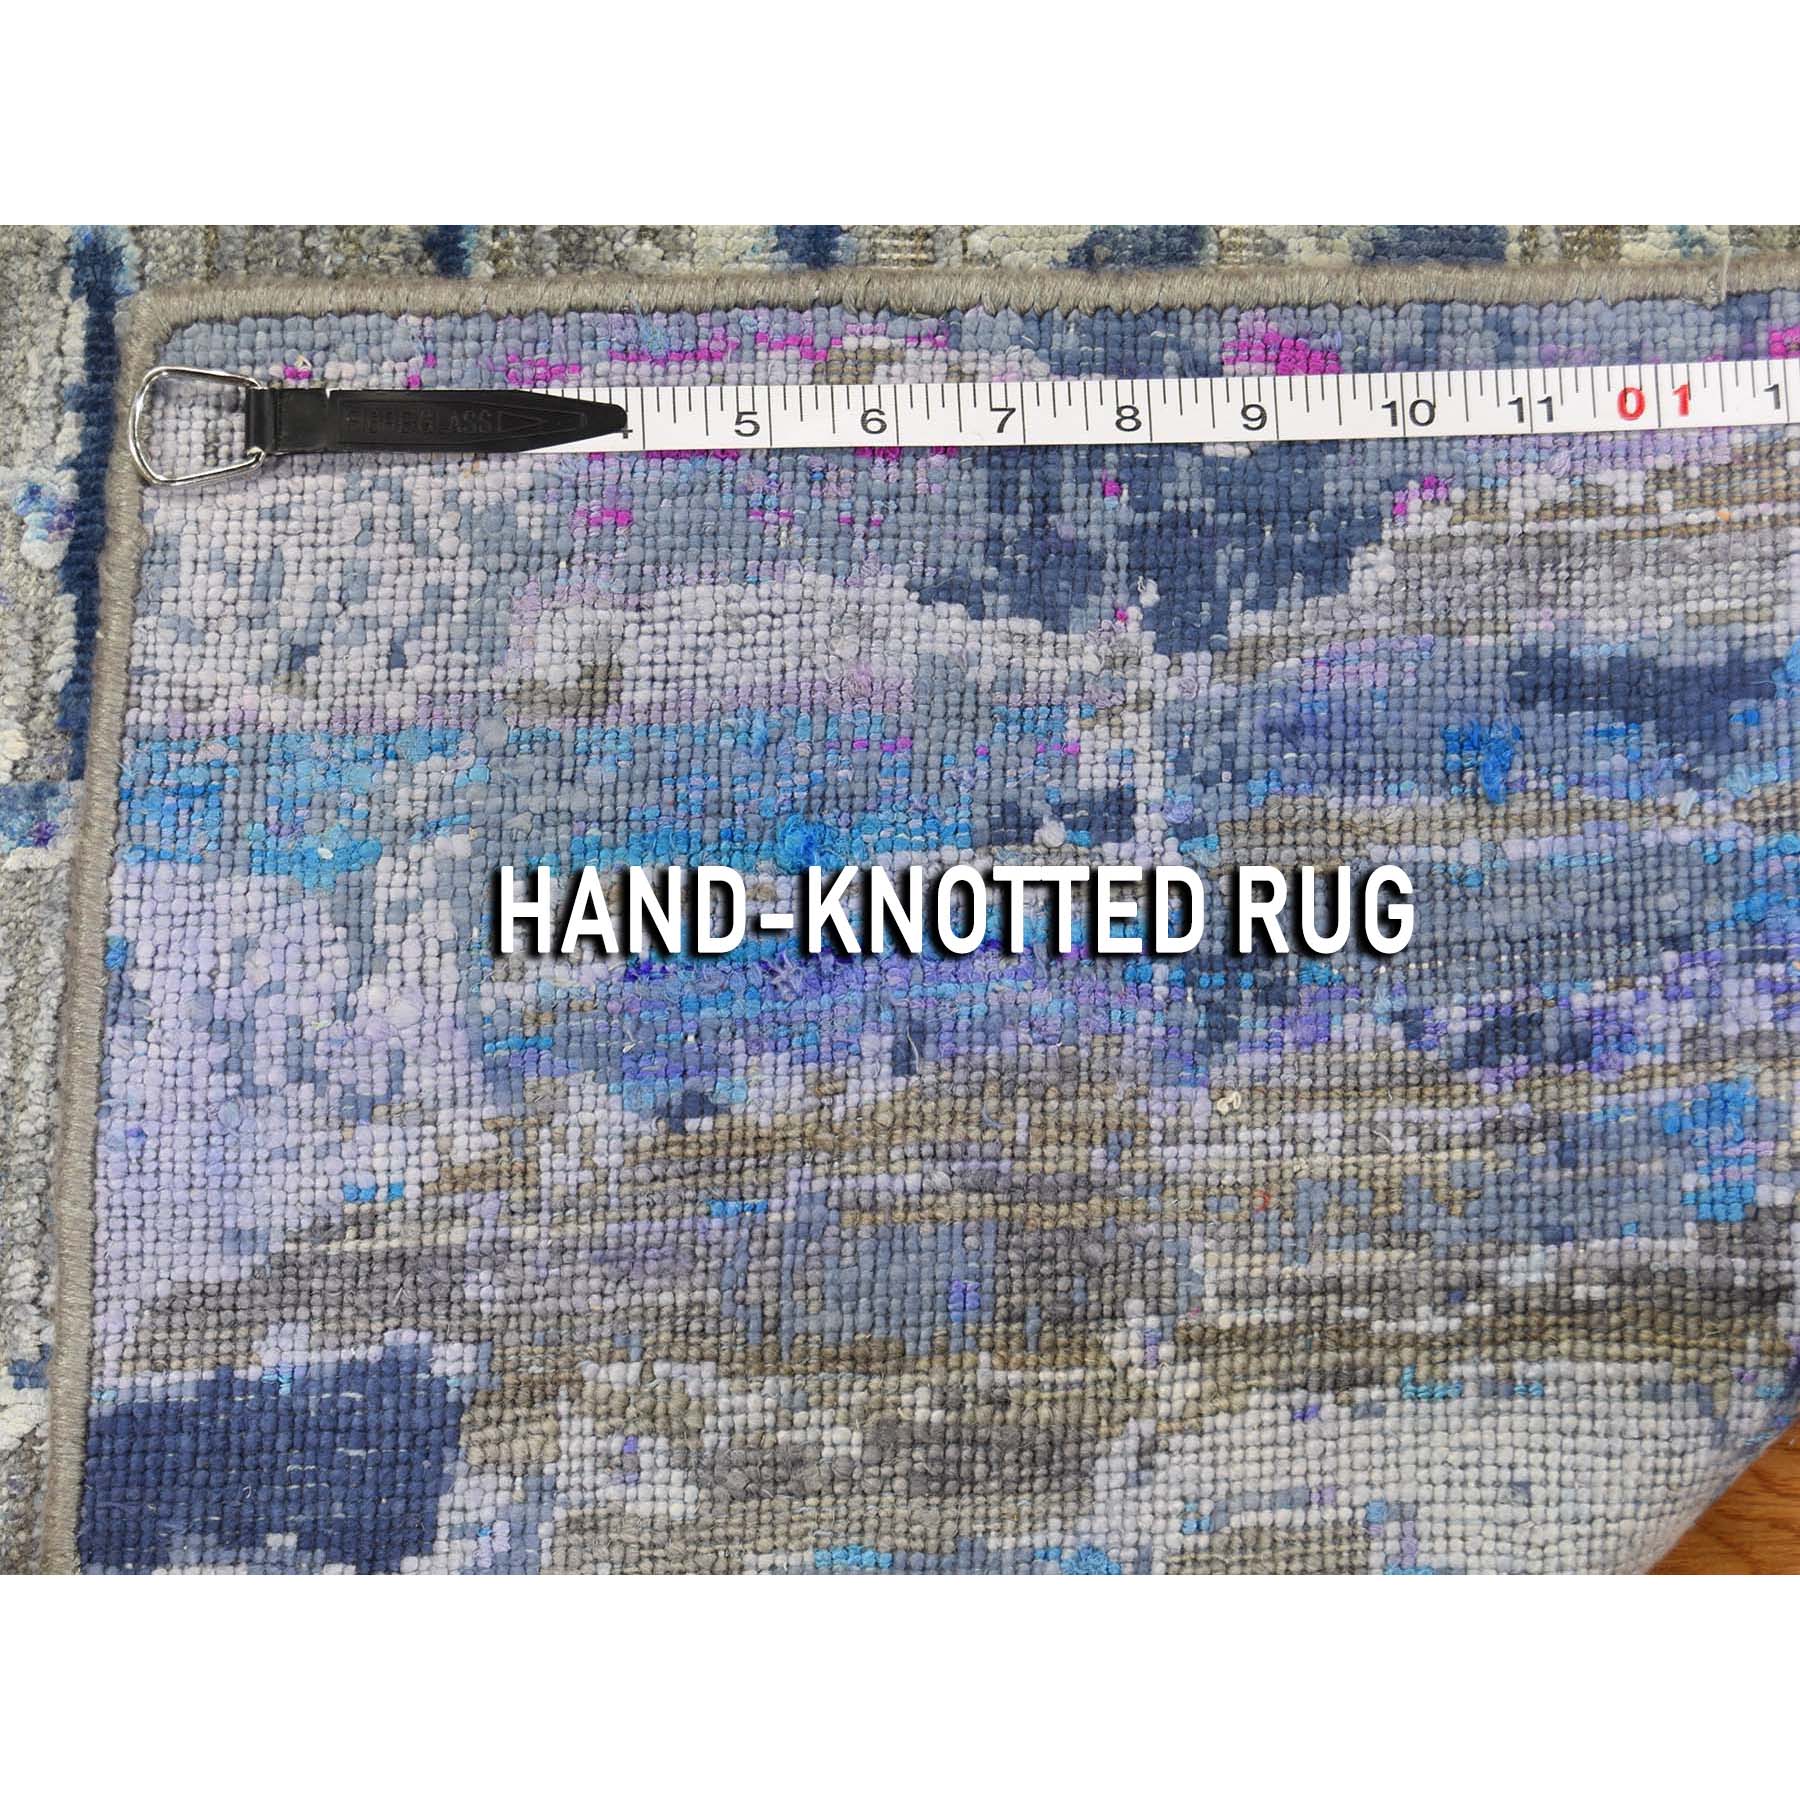 2'x2' Sari Silk Diminishing Bricks Square Hand Woven Oriental Sample Rug 